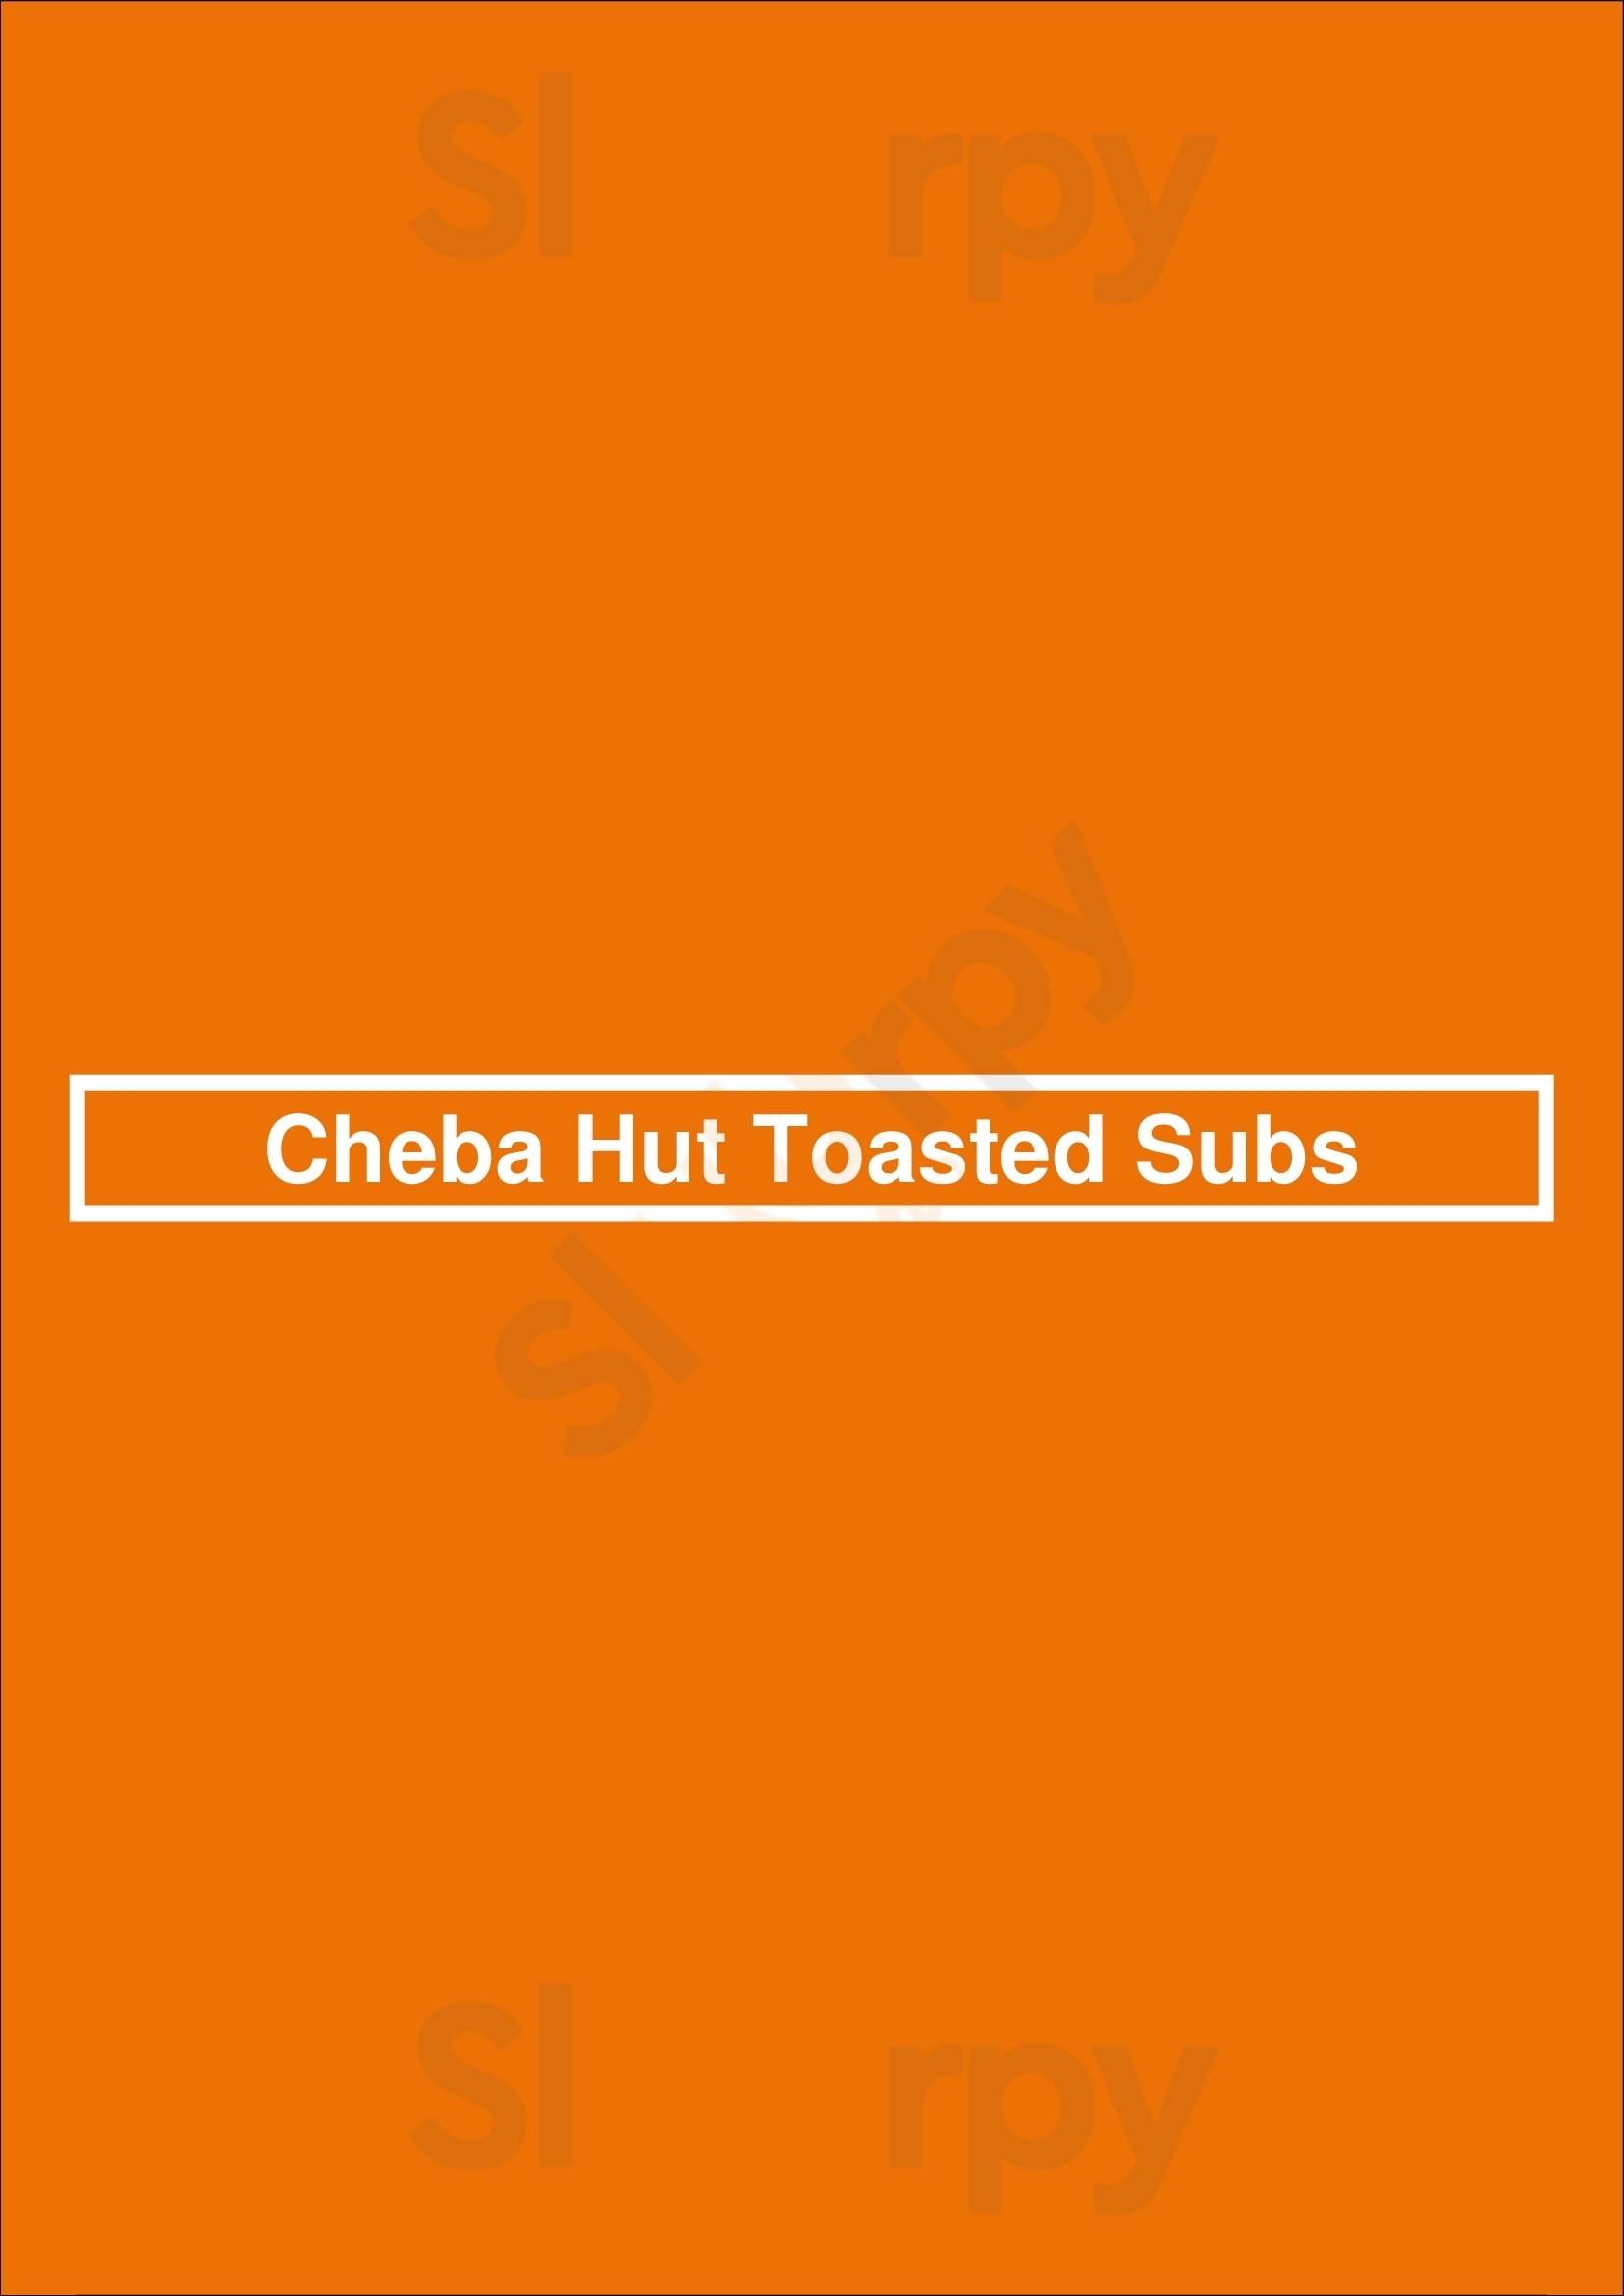 Cheba Hut Toasted Subs Tucson Menu - 1